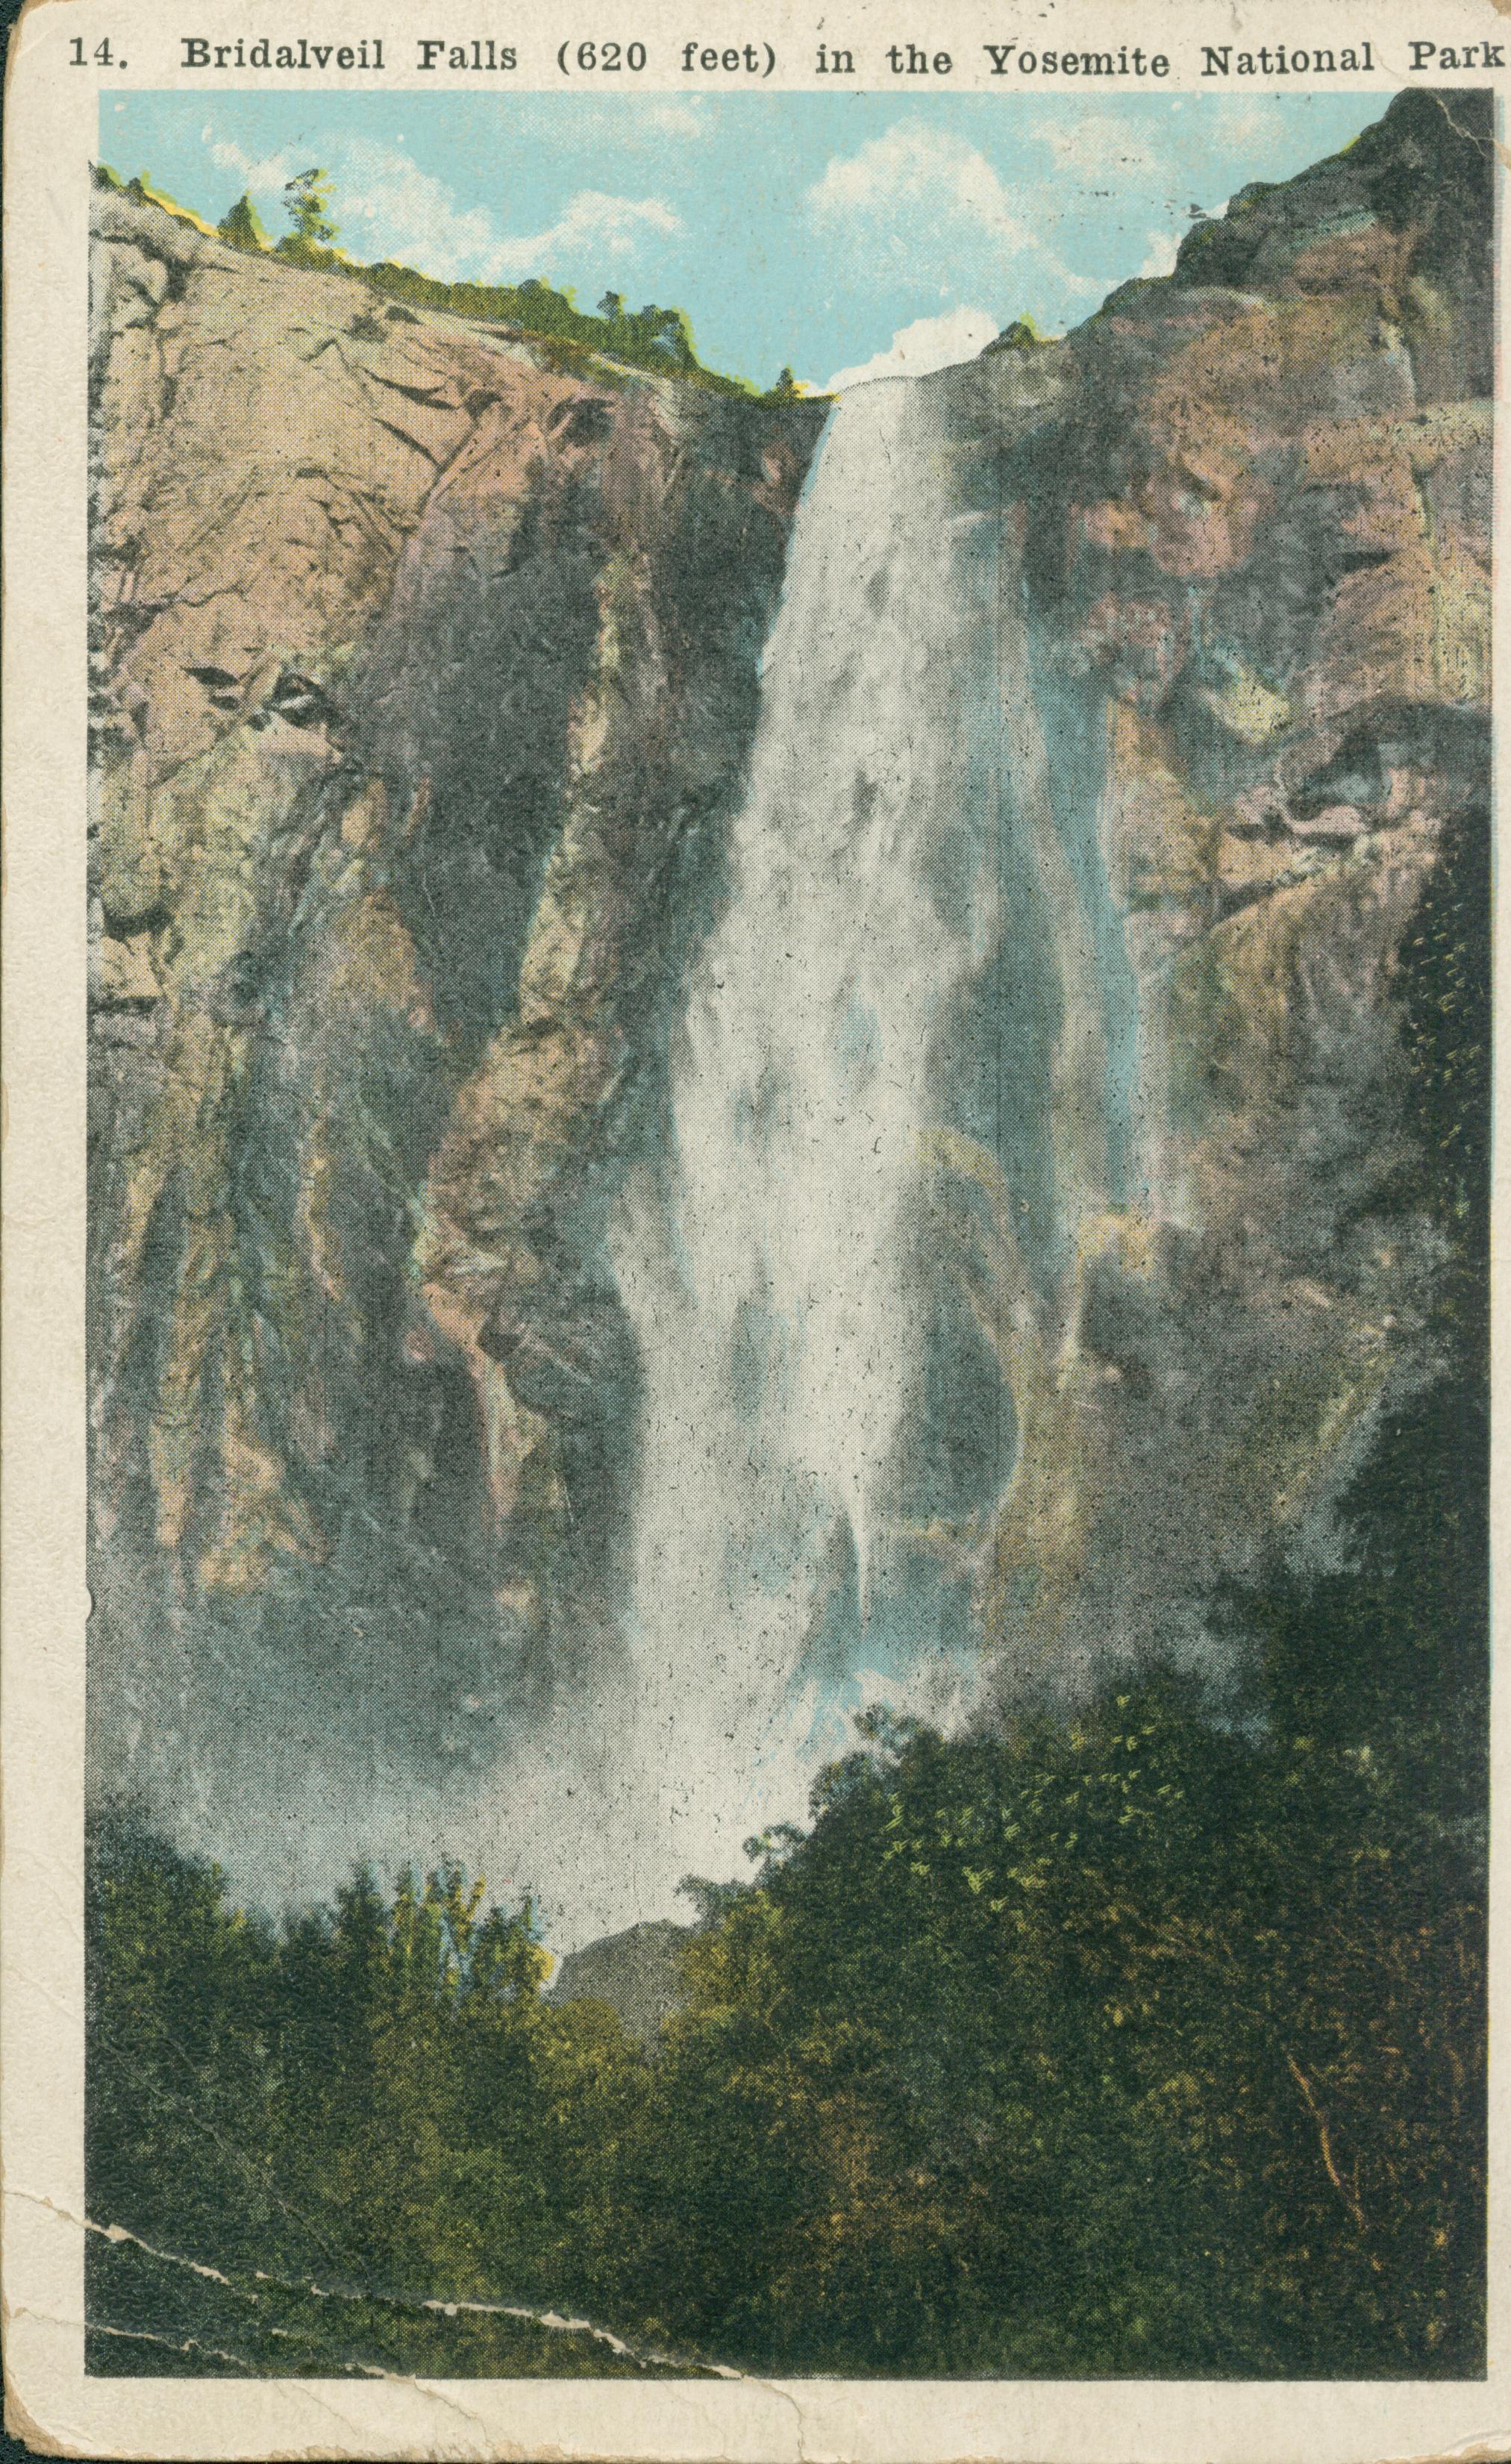 Shows a view of Bridal Veil Falls